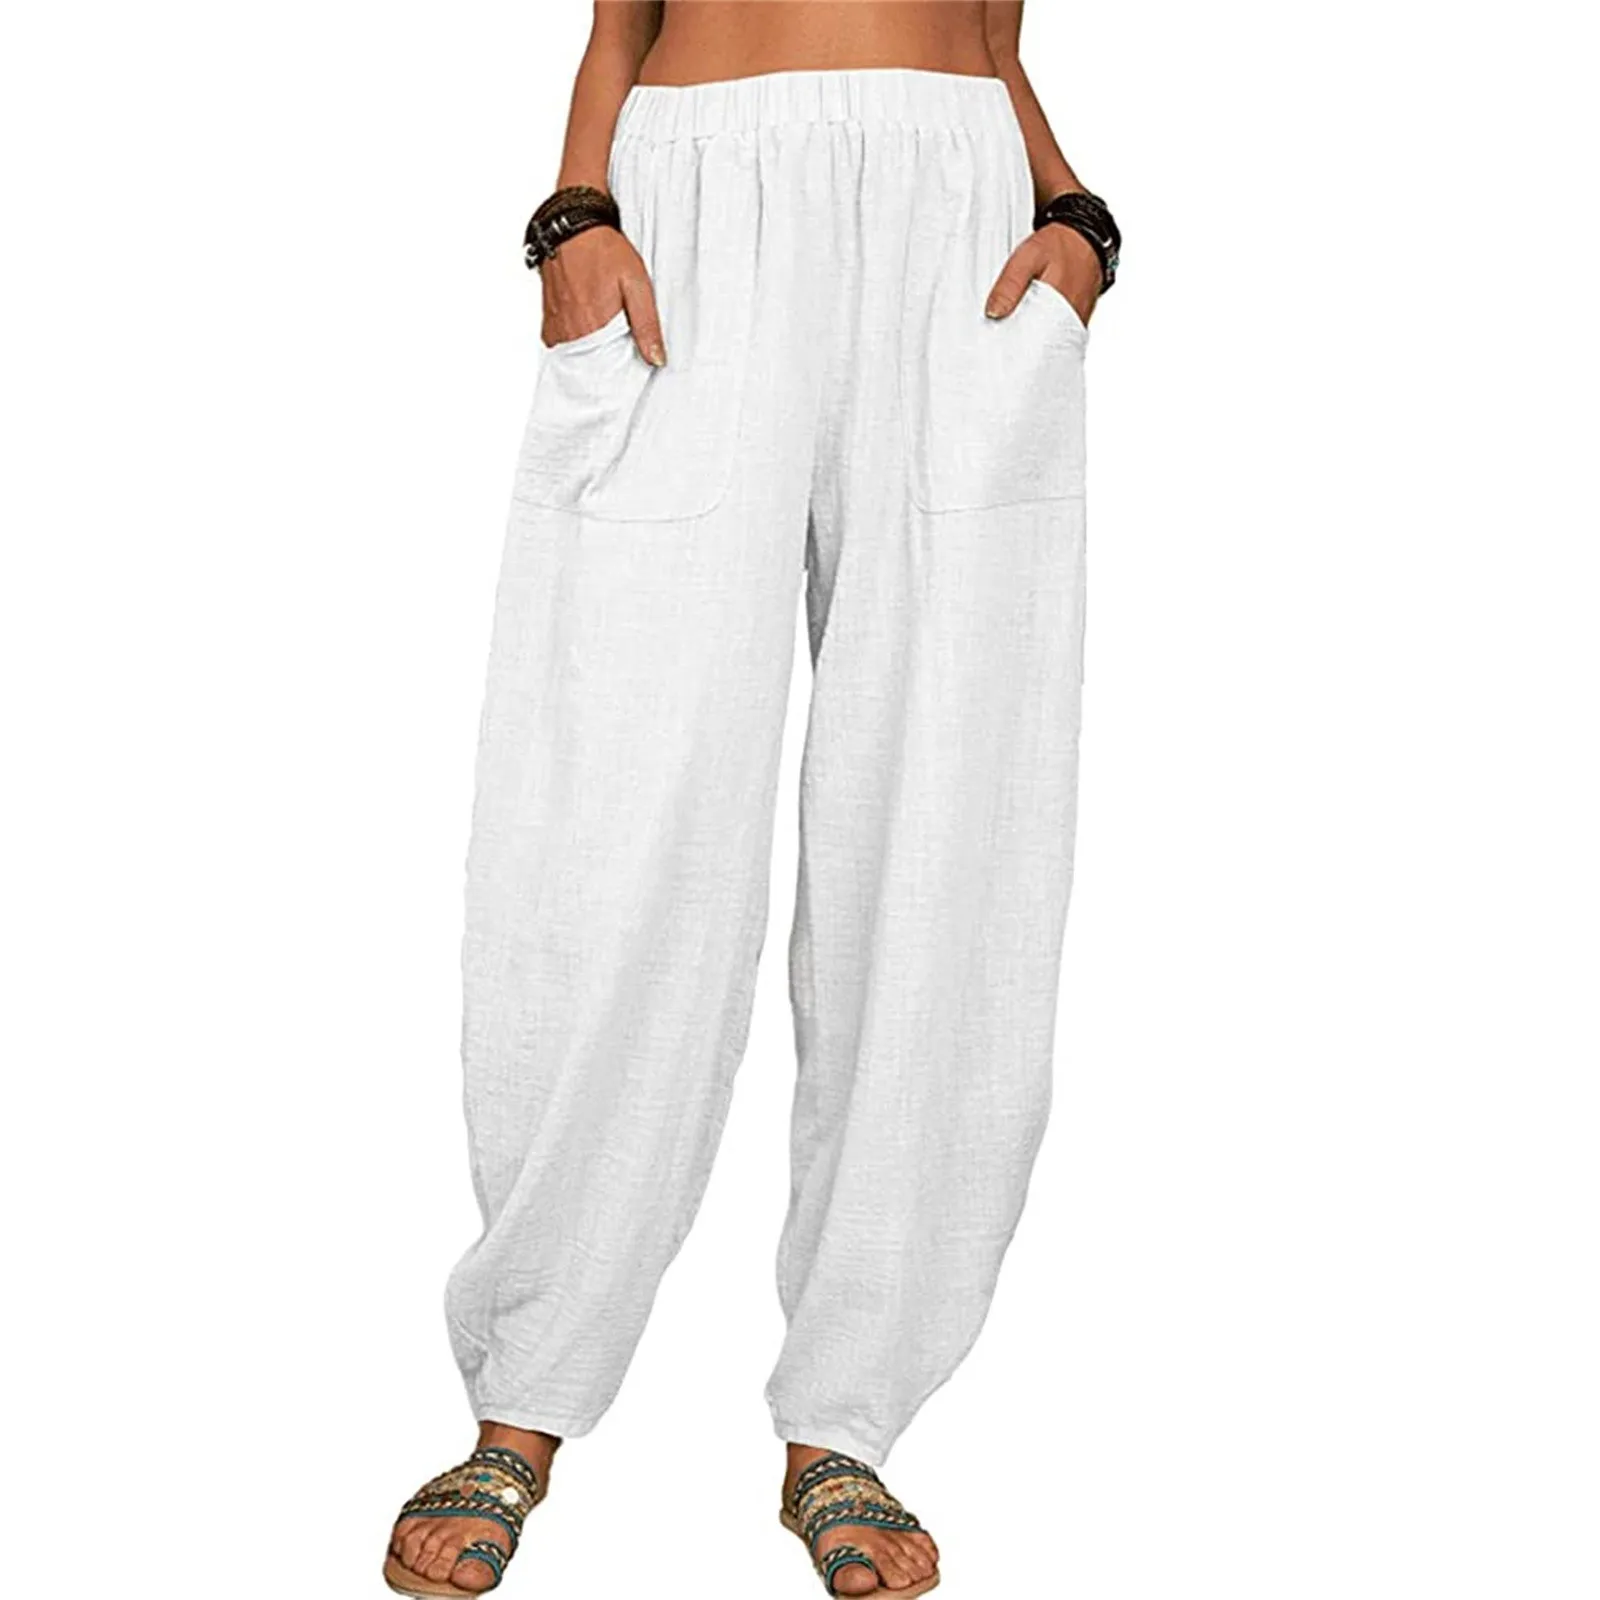 

Lucyever Vintage Boho Cotton Linen Pants for Women Summer Pockets Thin Beach Trousers Woman Casual High Waist Loose Harem Pants